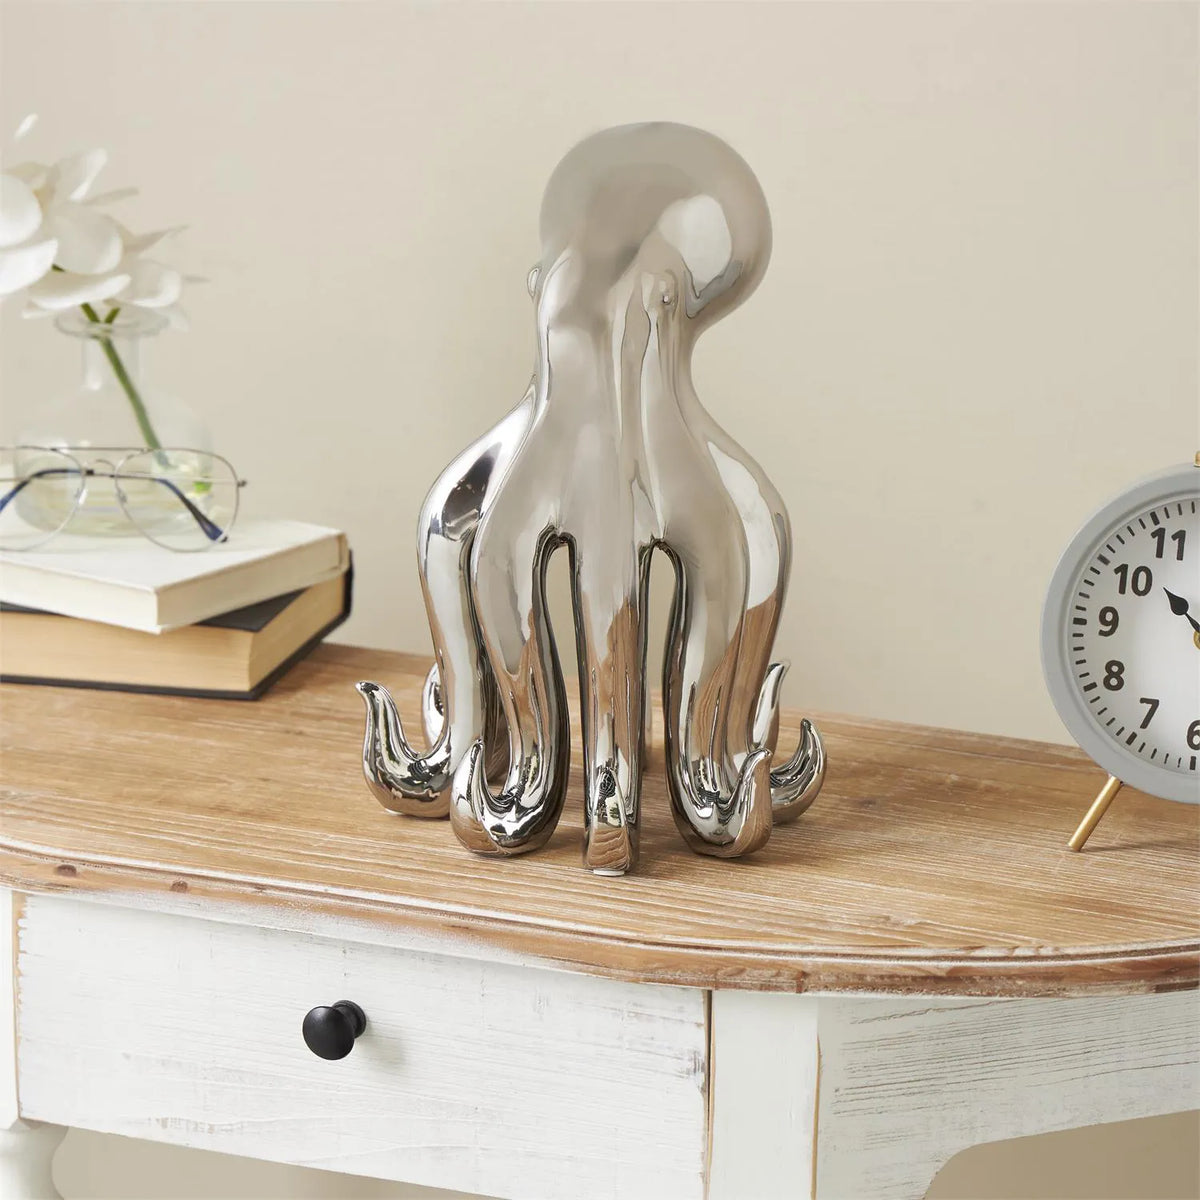 Silver Octopus Ceramic Sculpture with Metallic Finish